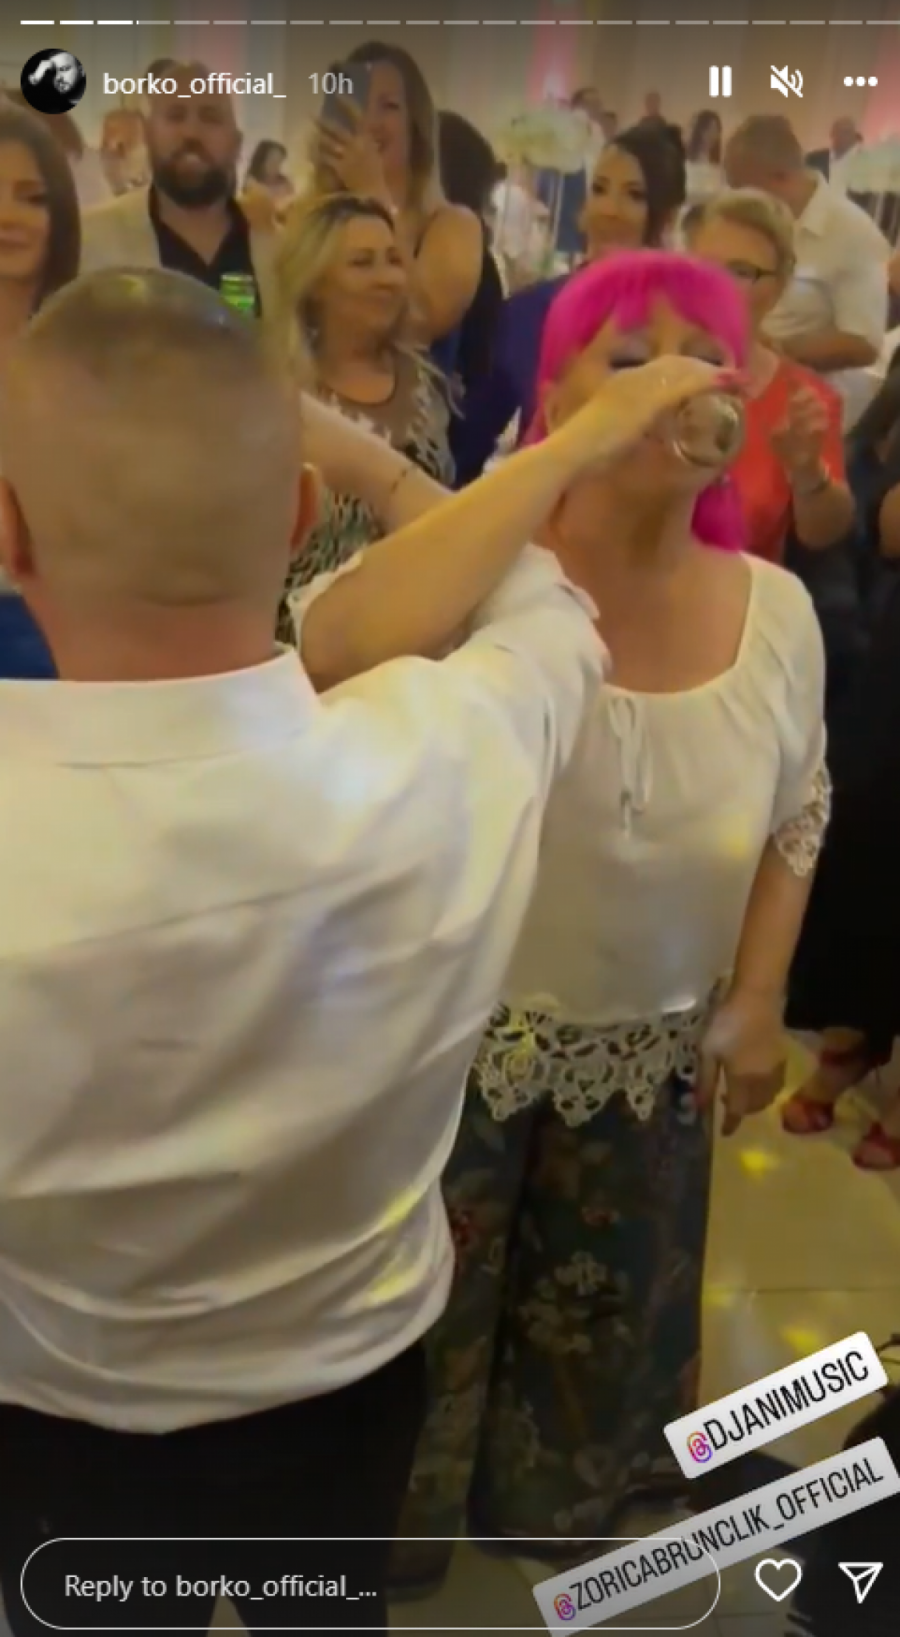 ATMOSFERA DOSTIGLA VRHUNAC Lete evri, Zorica Brunclik na eks ispila čašu, cela estrada na nogama: Đani ženi sina! (FOTO+VIDEO)